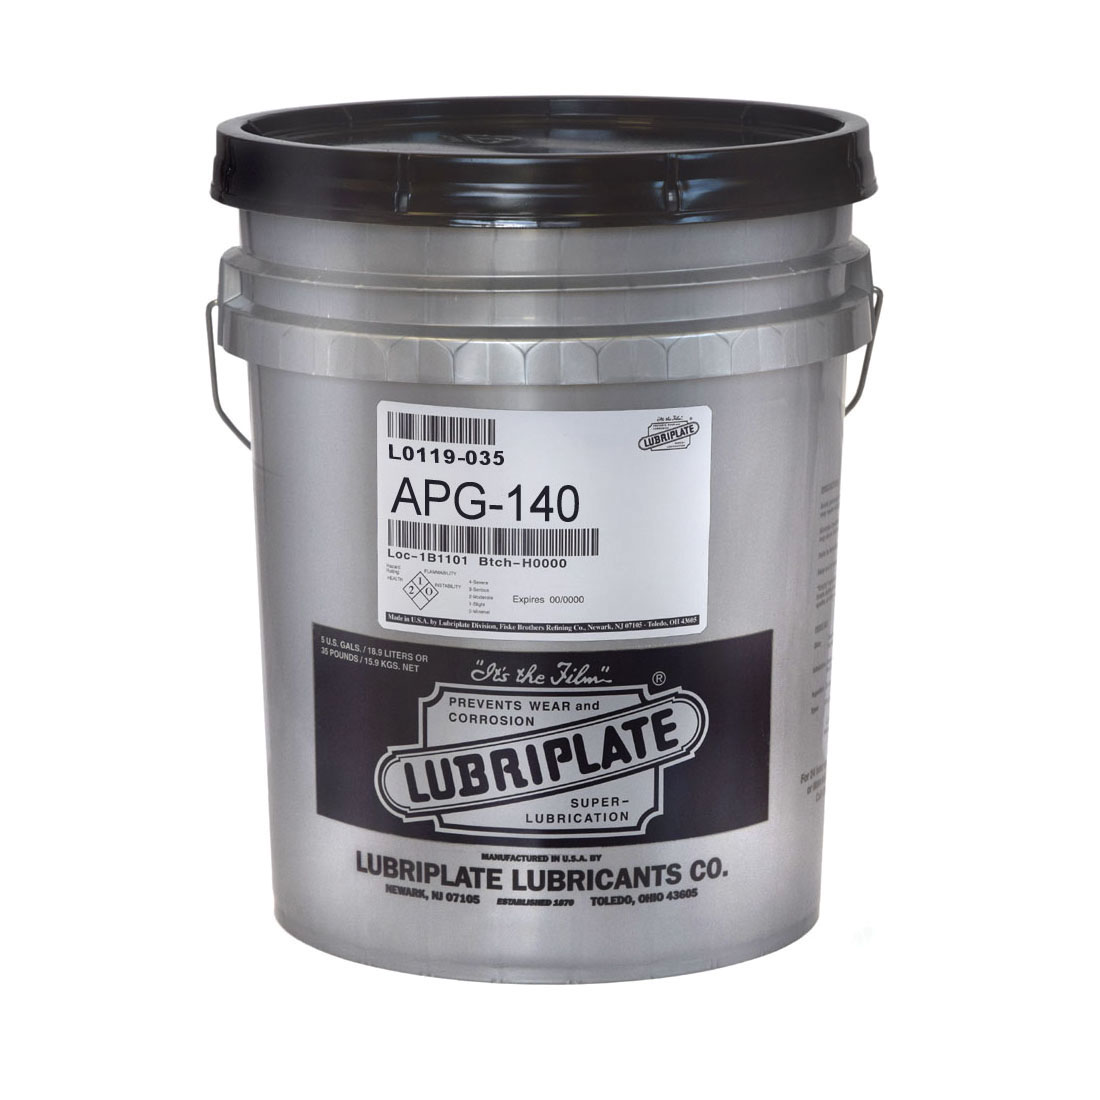 Lubriplate® L0119-035 APG-140 Petroleum Based Gear Oil, 35 lb Pail, Additive Odor/Scent, Liquid Form, ISO 460/SAE 85W-140 Grade, Amber